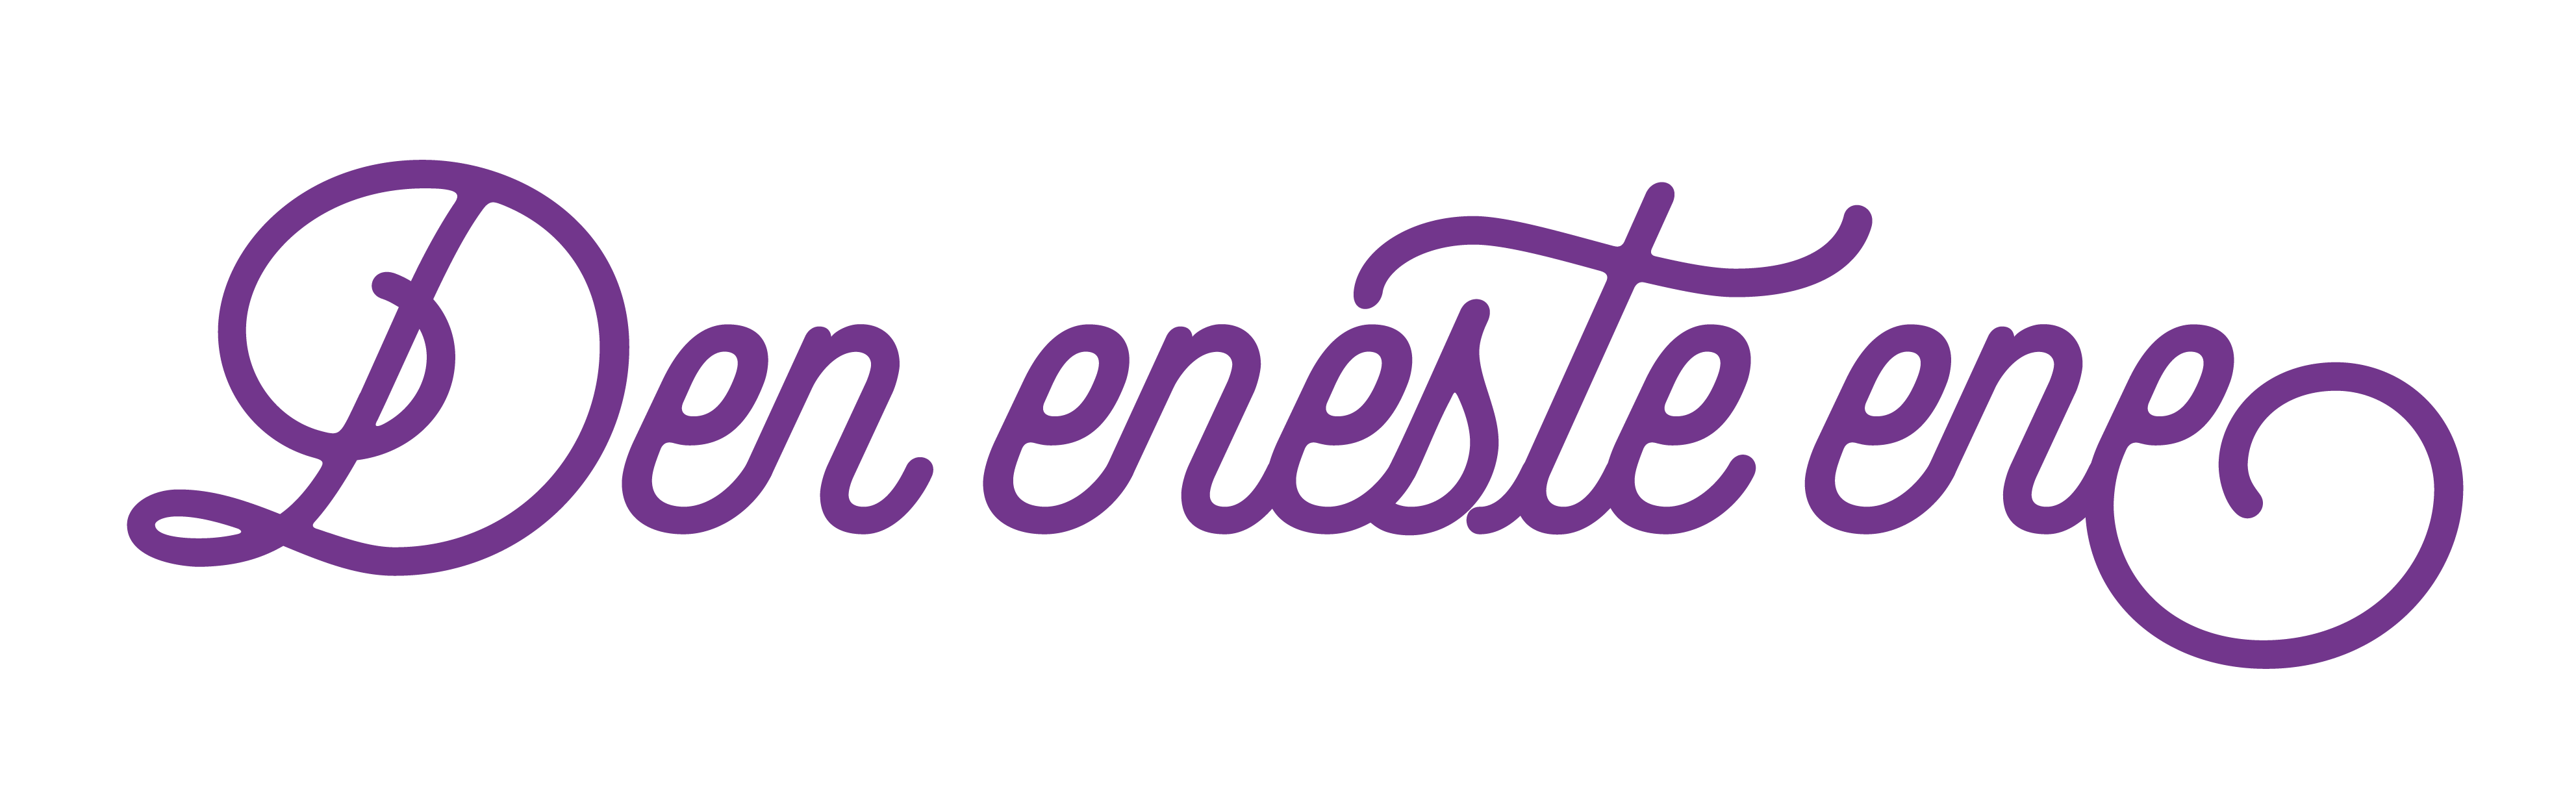 DEN ENESTE ENEs produkt logo